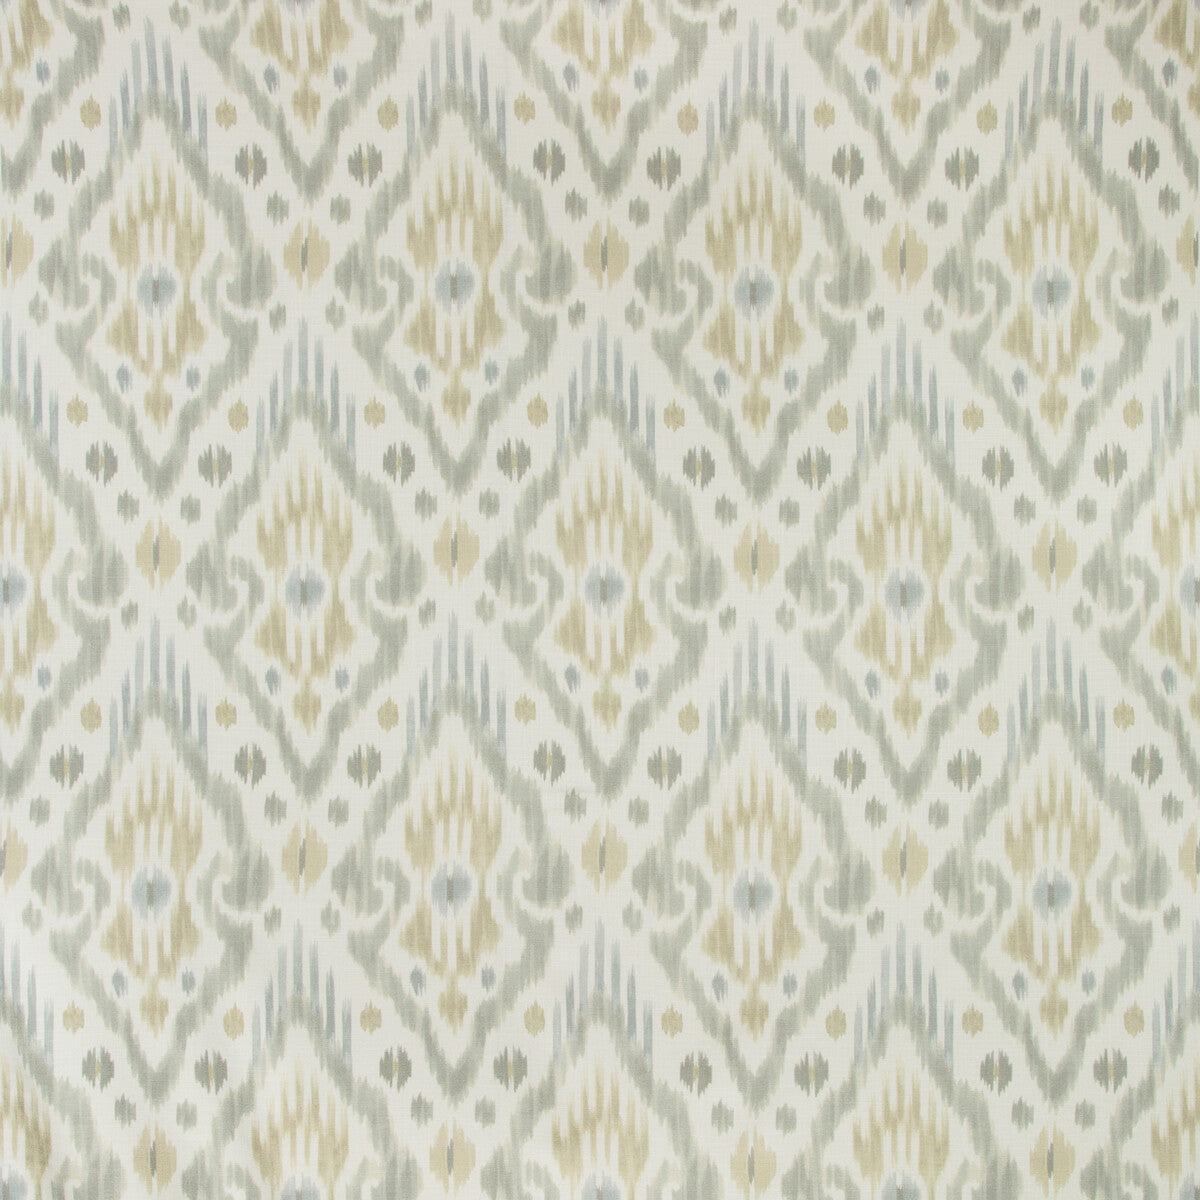 Kravet Basics fabric in conquet-316 color - pattern CONQUET.316.0 - by Kravet Basics